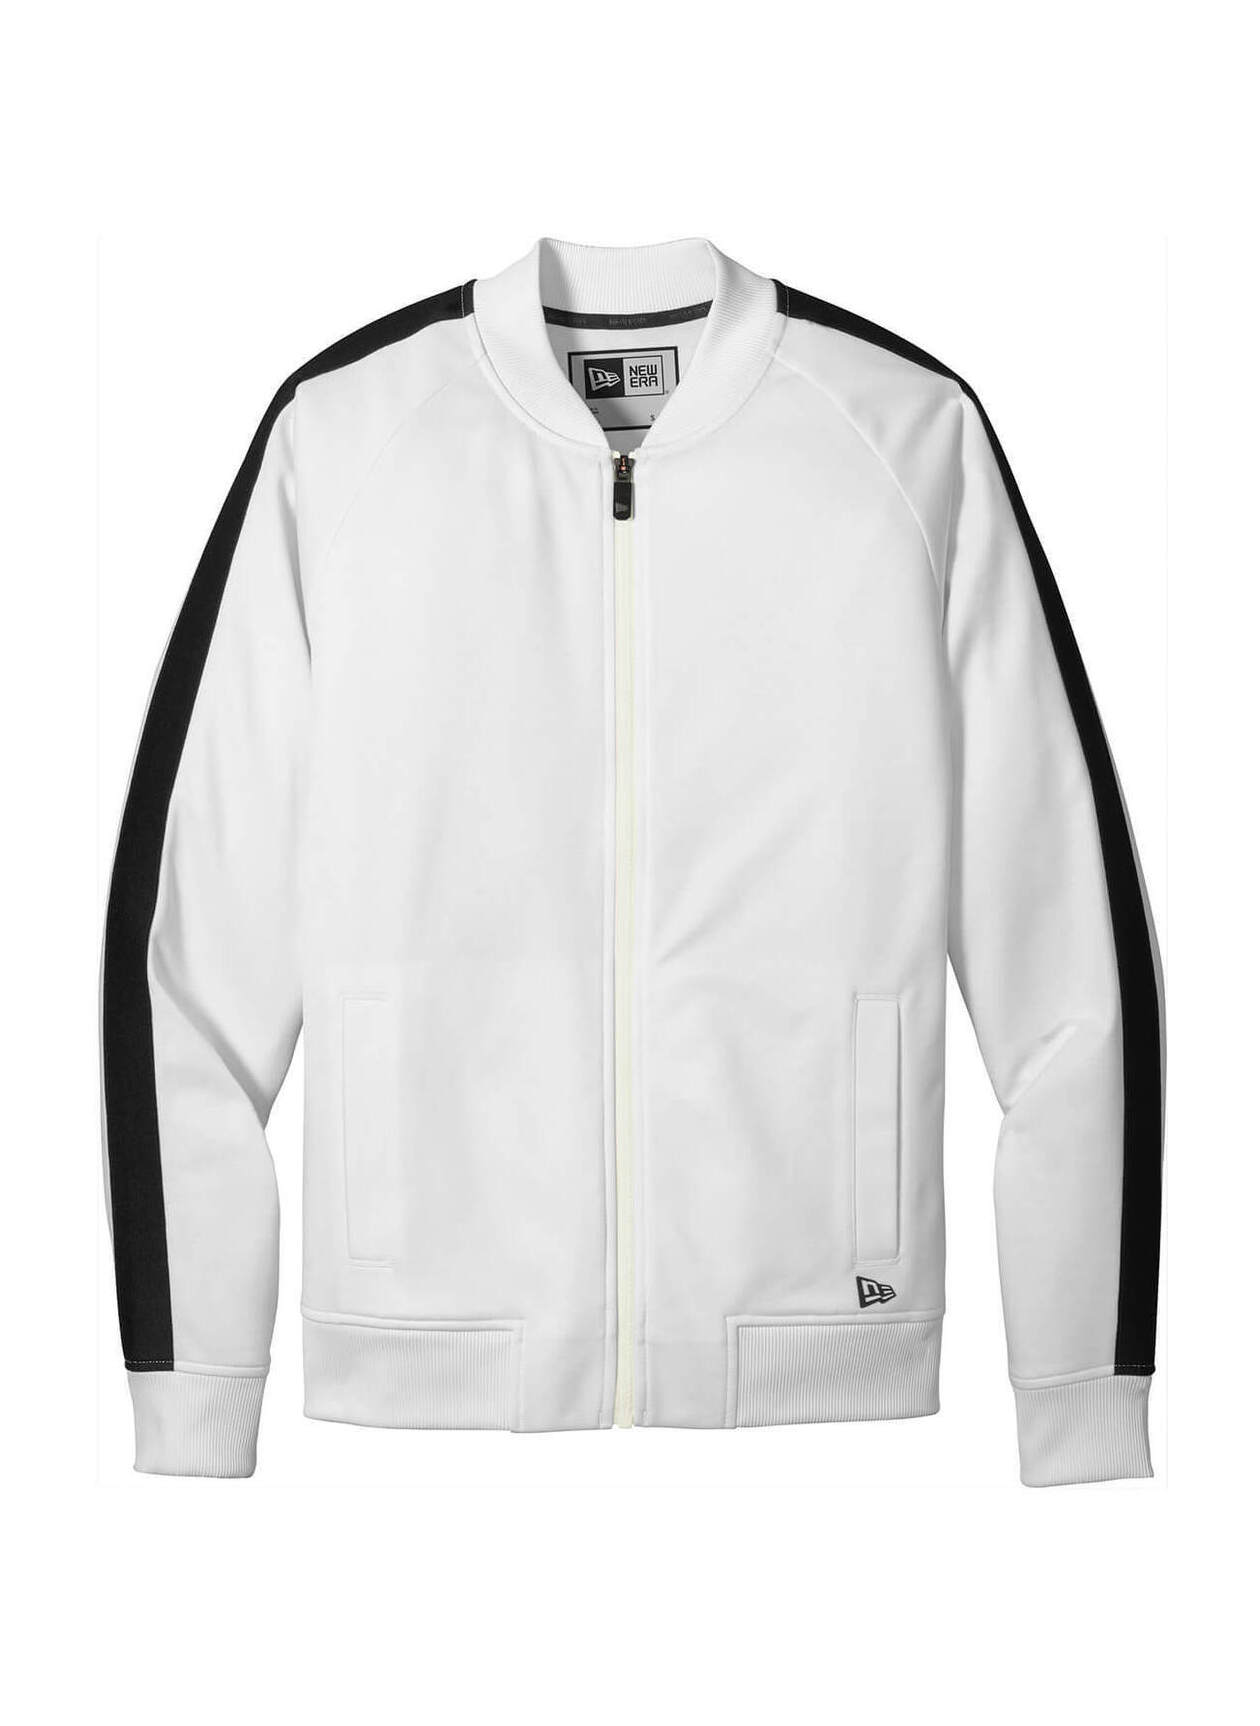 New Era Men's White / Black Track Jacket